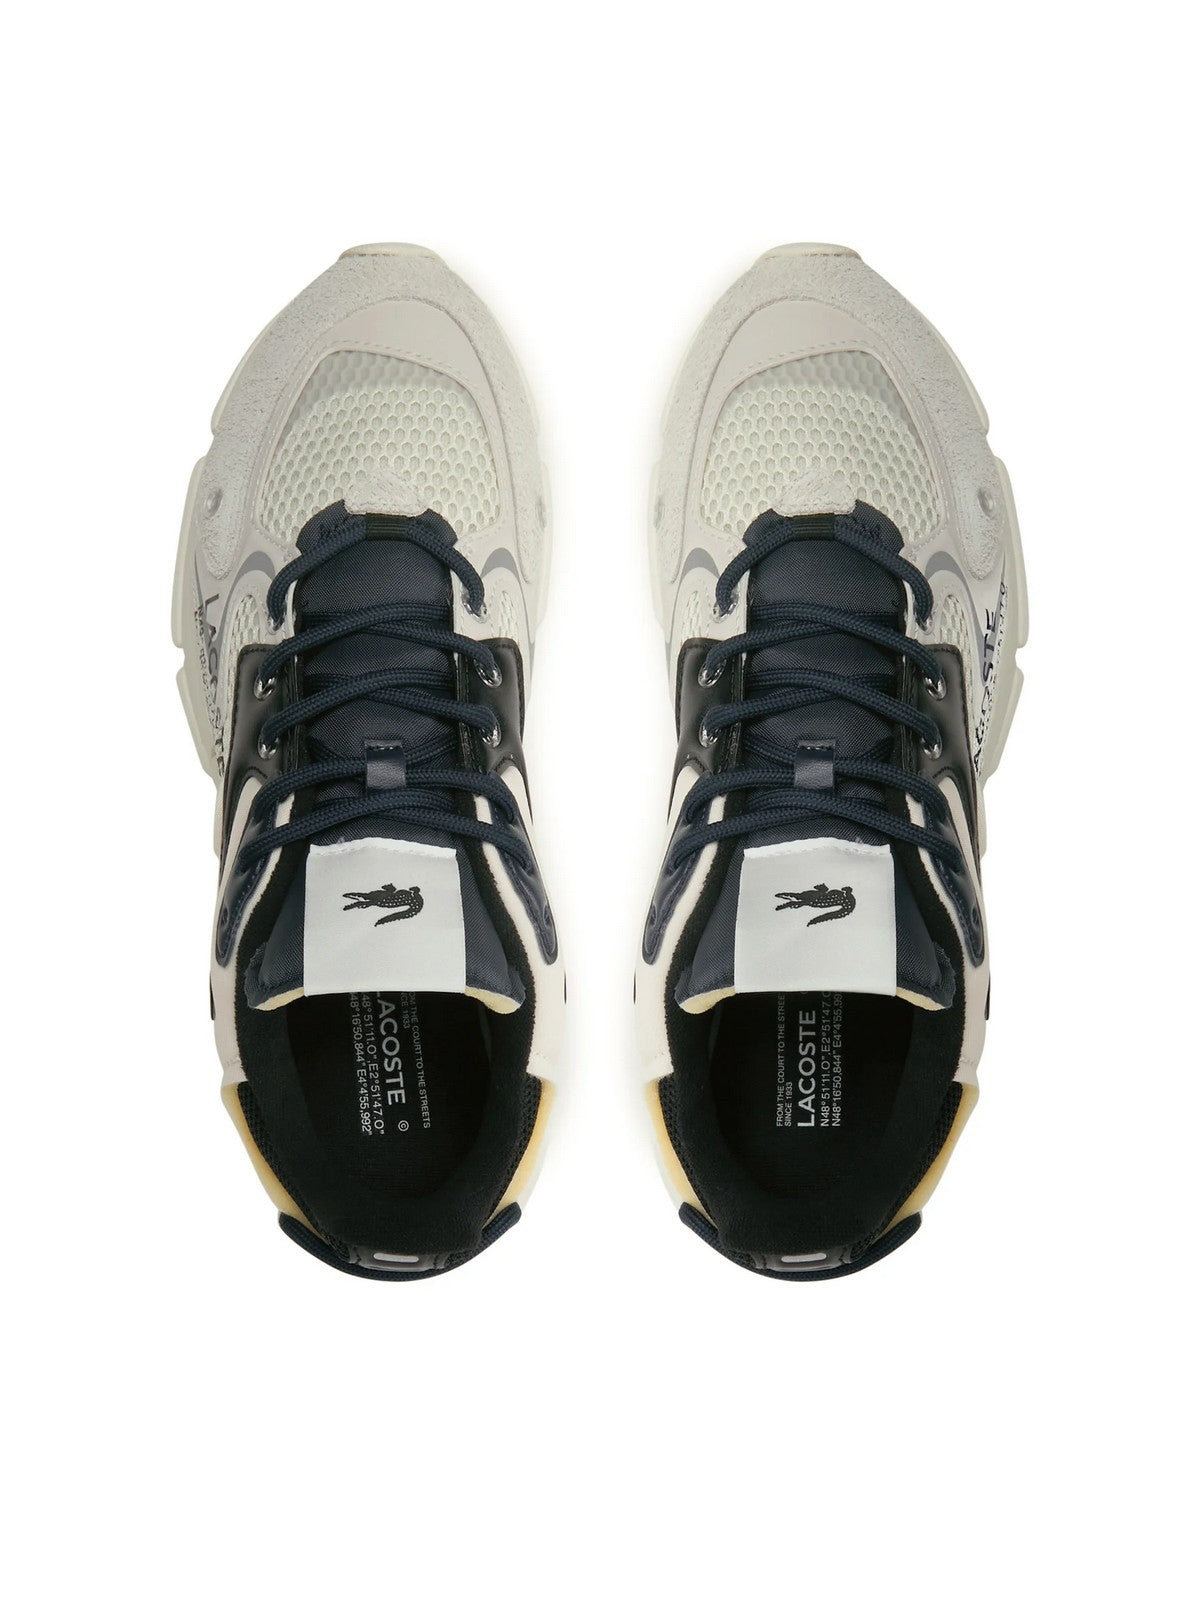 LACOSTE Sneaker Uomo  745SMA0001 2G9 Bianco